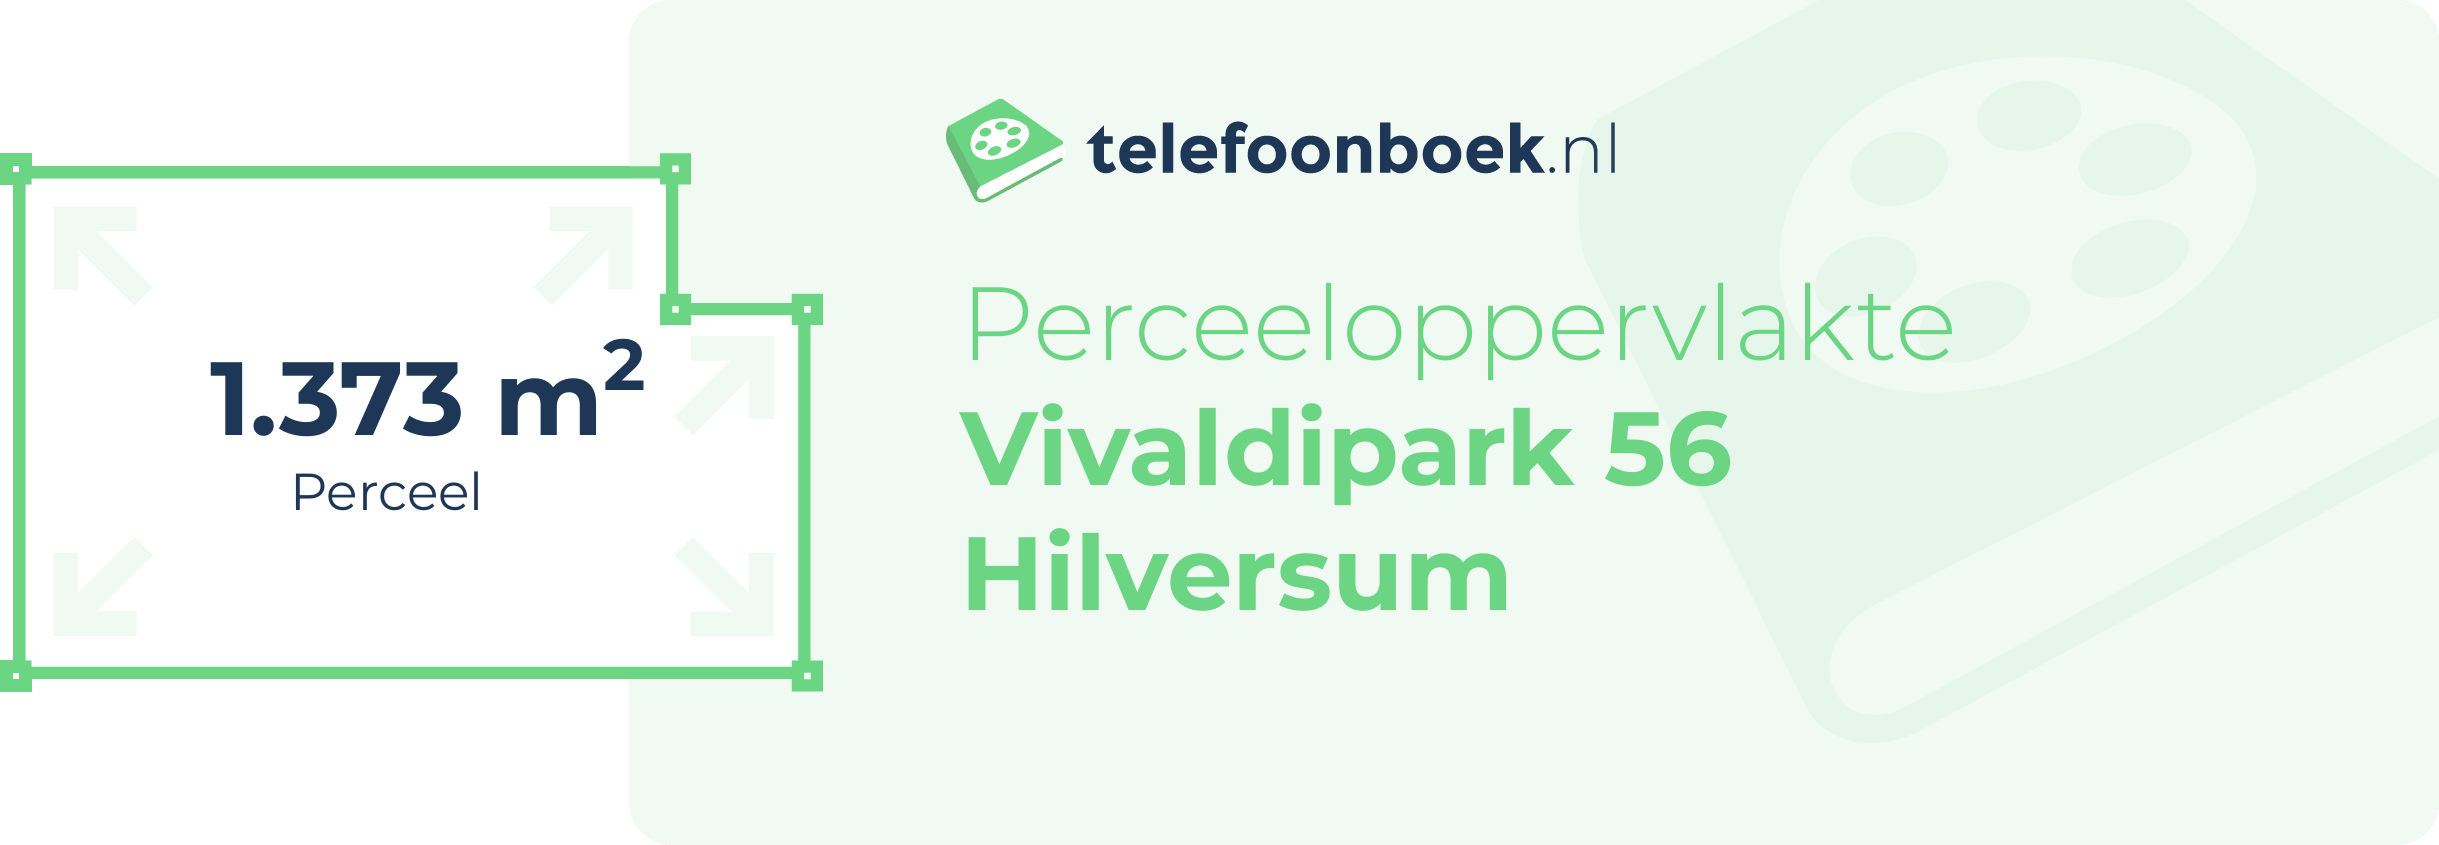 Perceeloppervlakte Vivaldipark 56 Hilversum